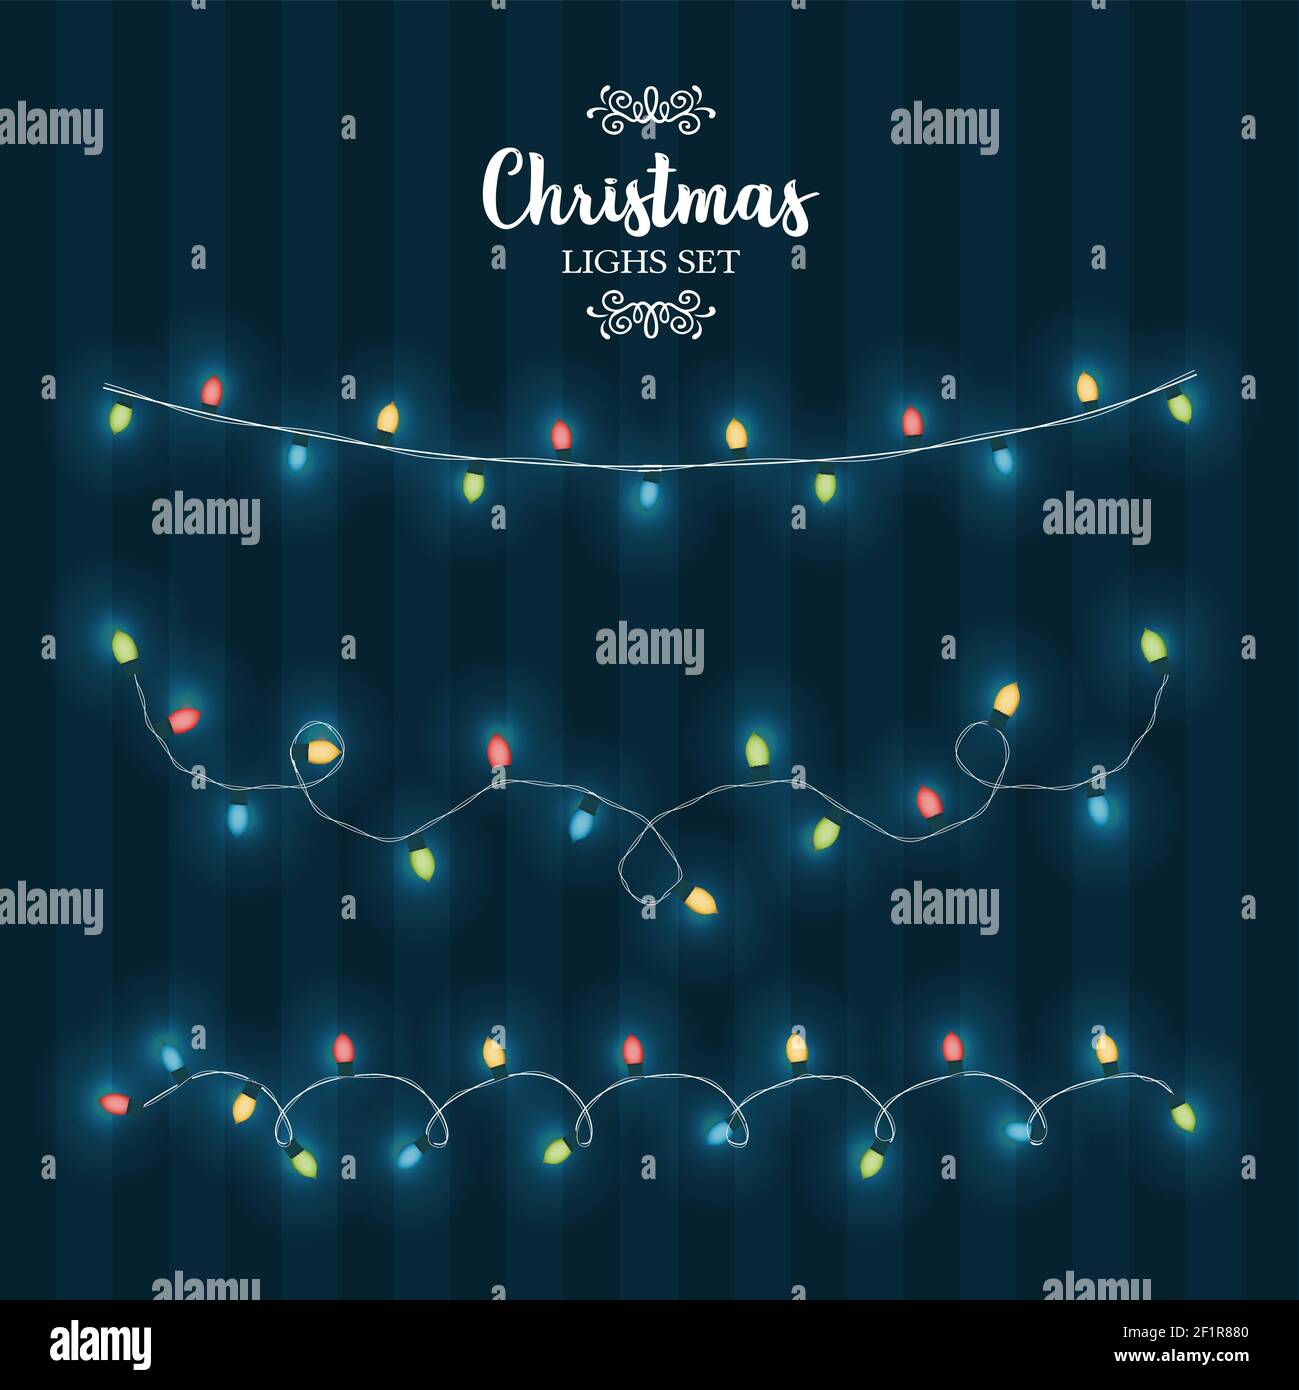 Christmas lights set, shiny light bulb string for festive xmas holiday season design. Traditional garland decoration collection. Stock Vector